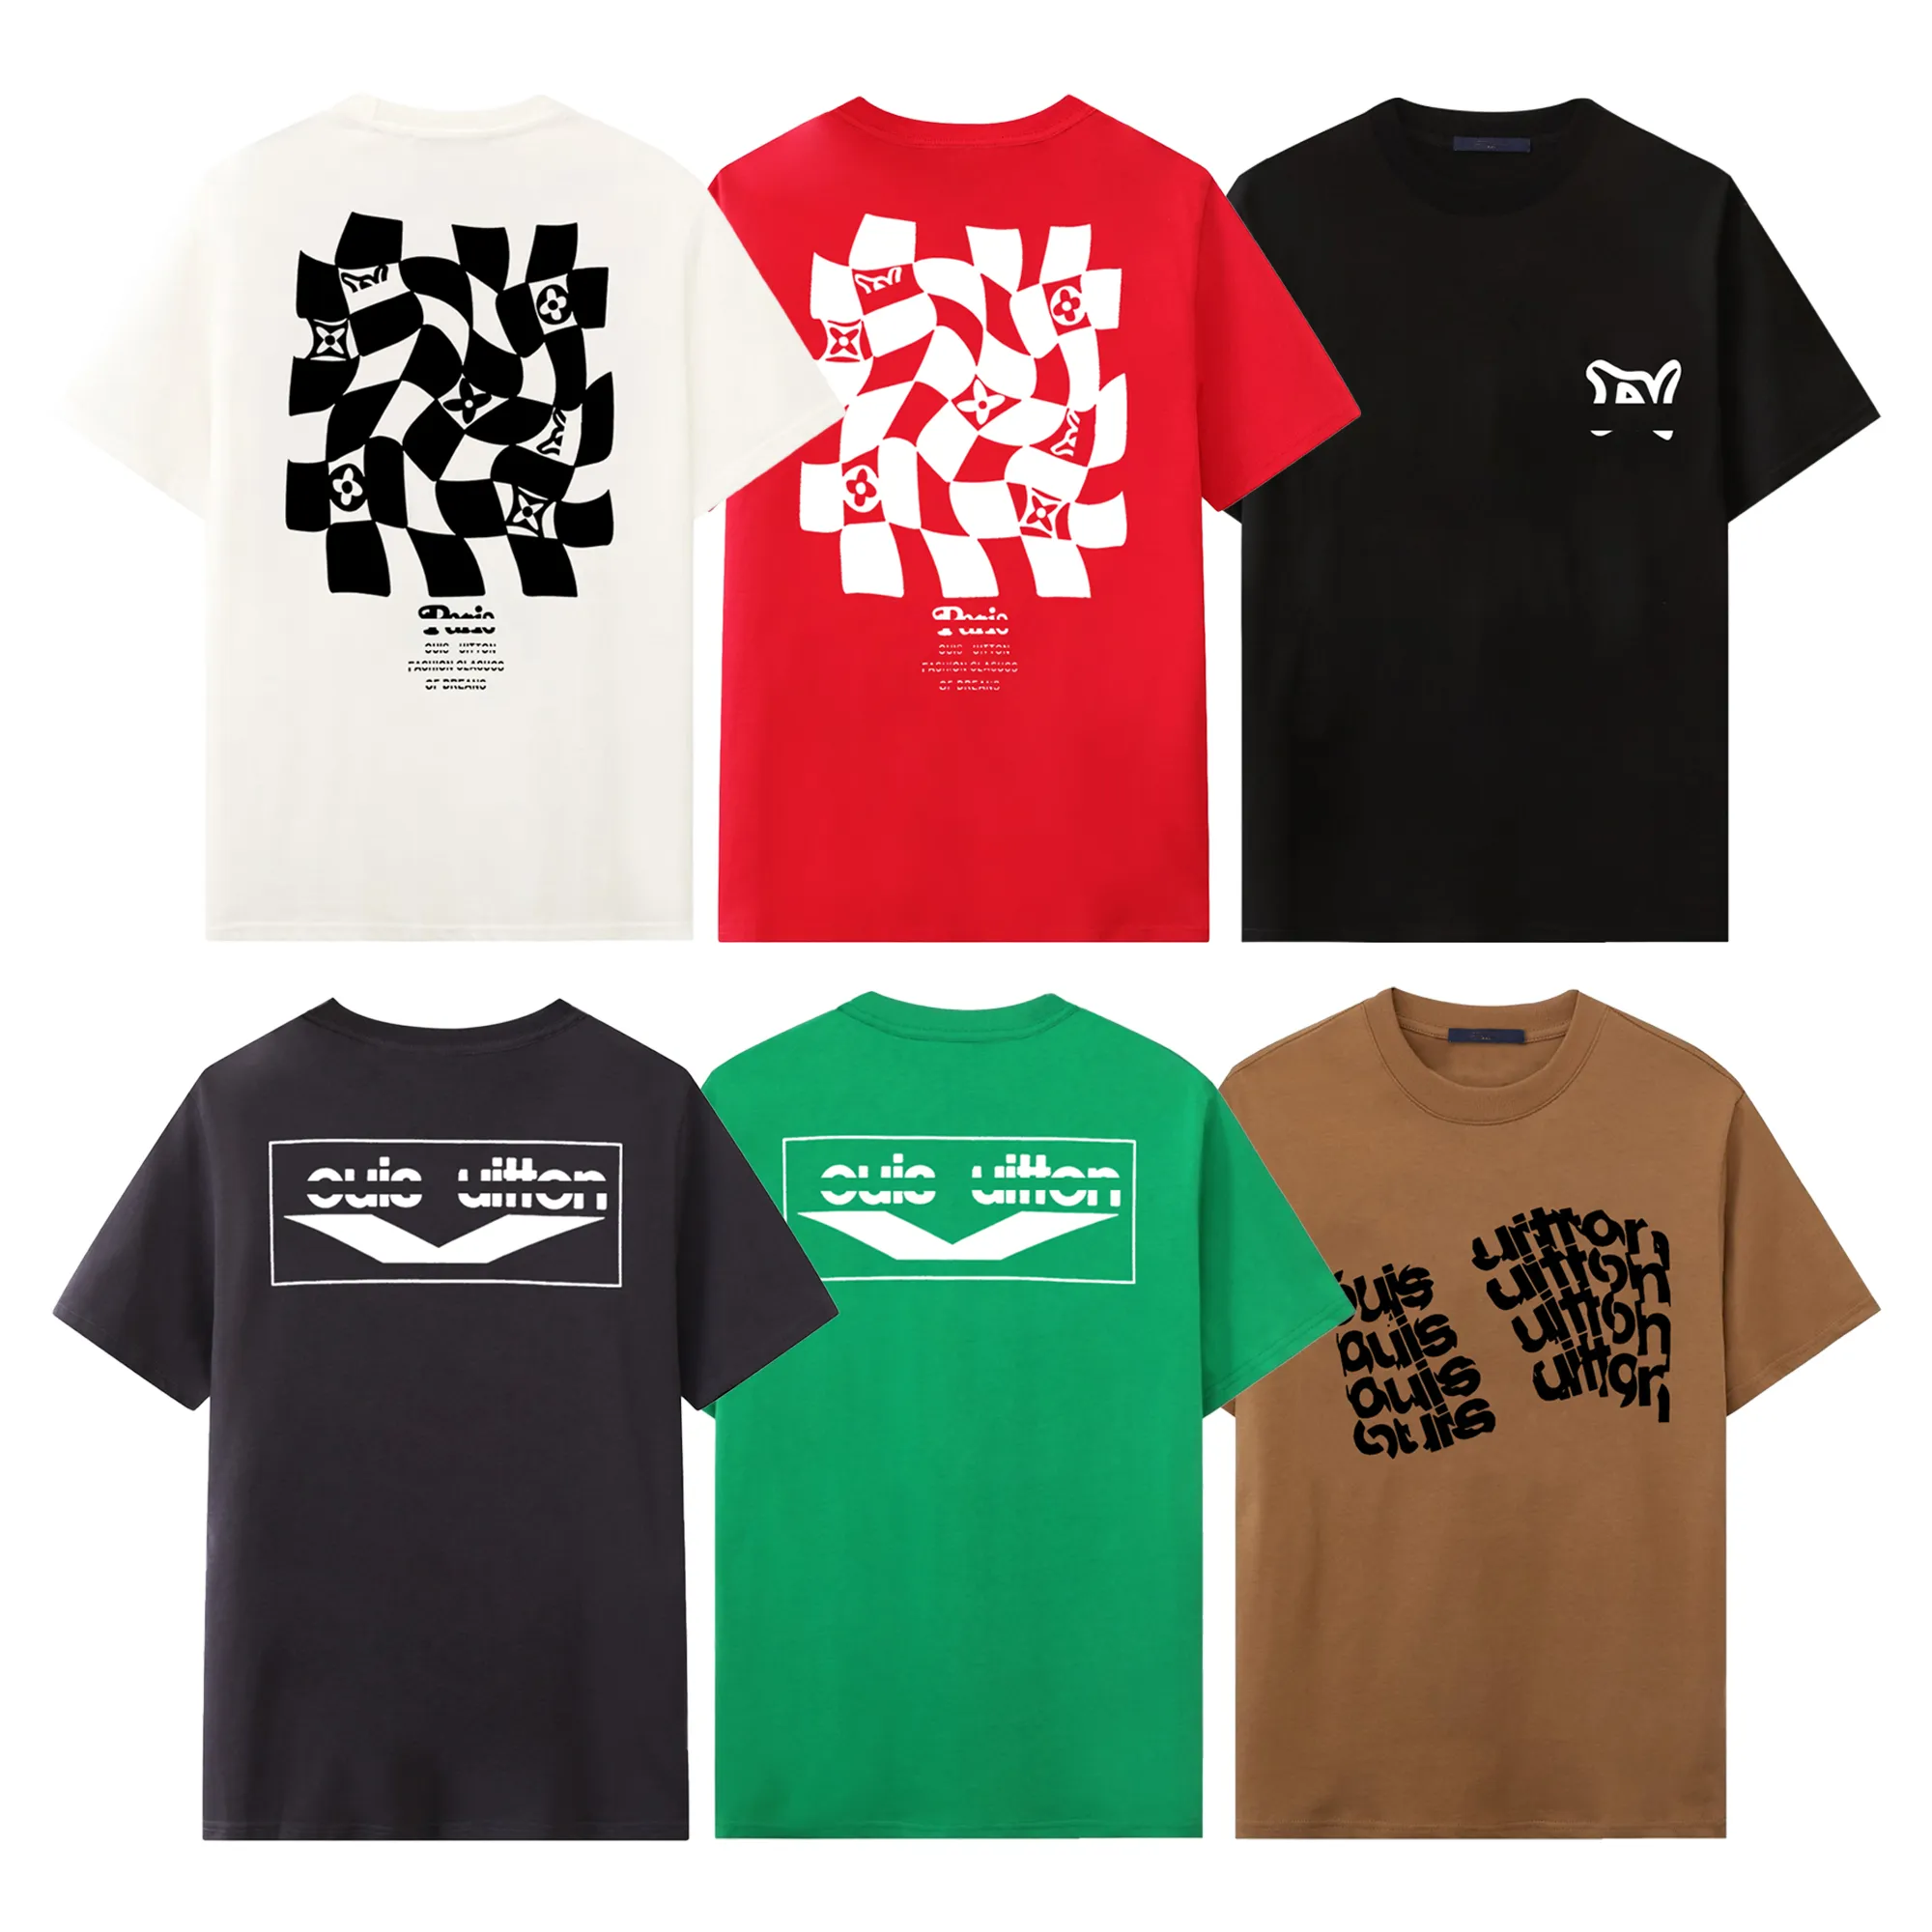 Diseñadores para hombre Camiseta Hombre Camisetas para mujer con letras Imprimir Mangas cortas Camisas de verano Hombres Camisetas sueltas L-11 Tamaño XS-XL